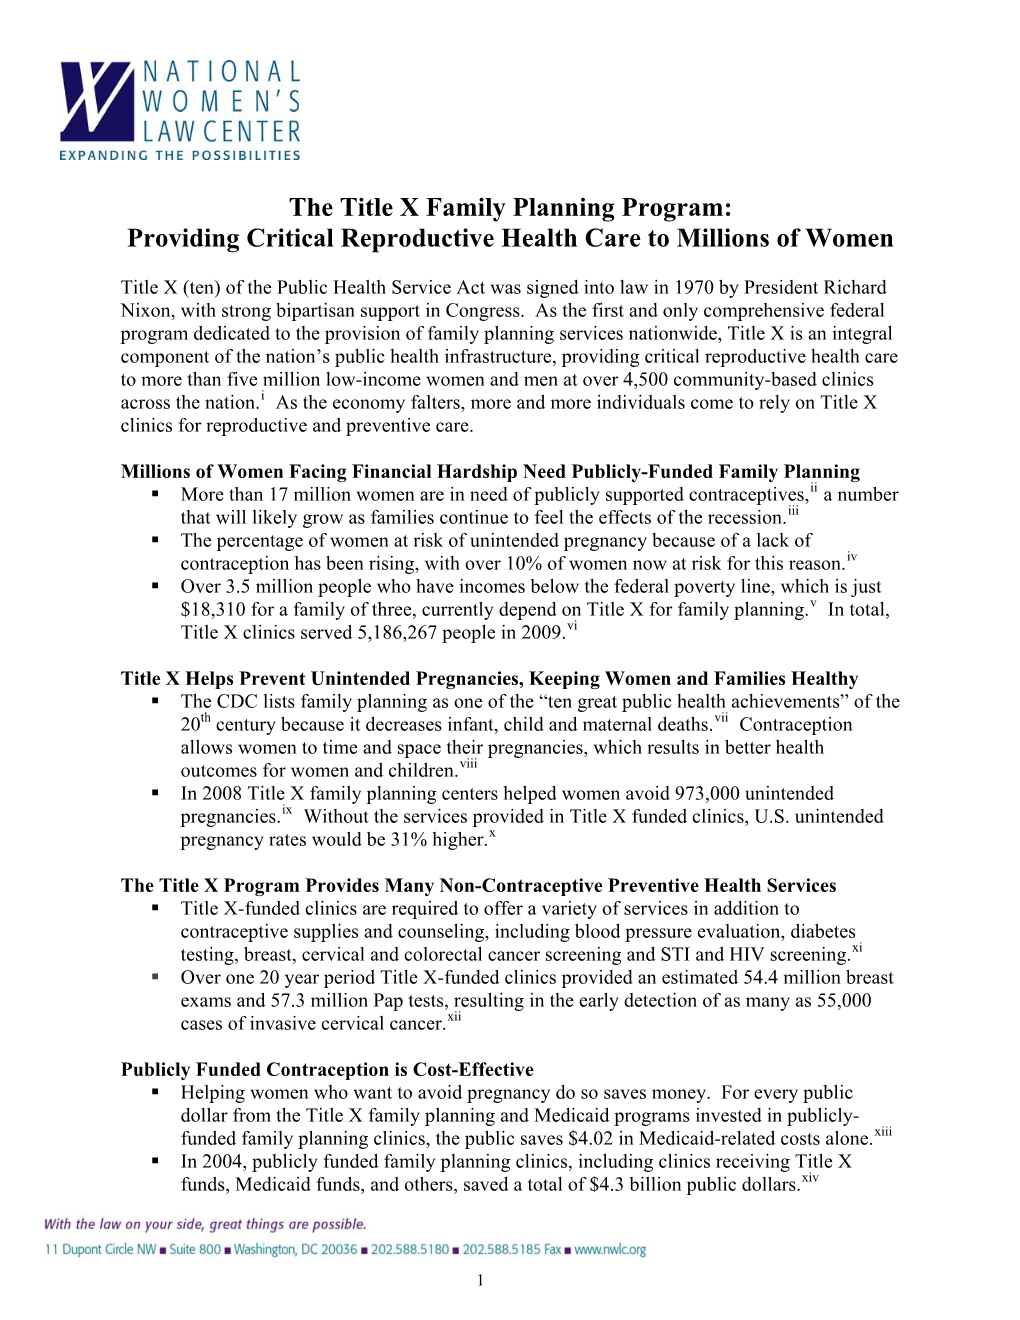 TITLE X 101: Providing Critical Reproductive Health Care To